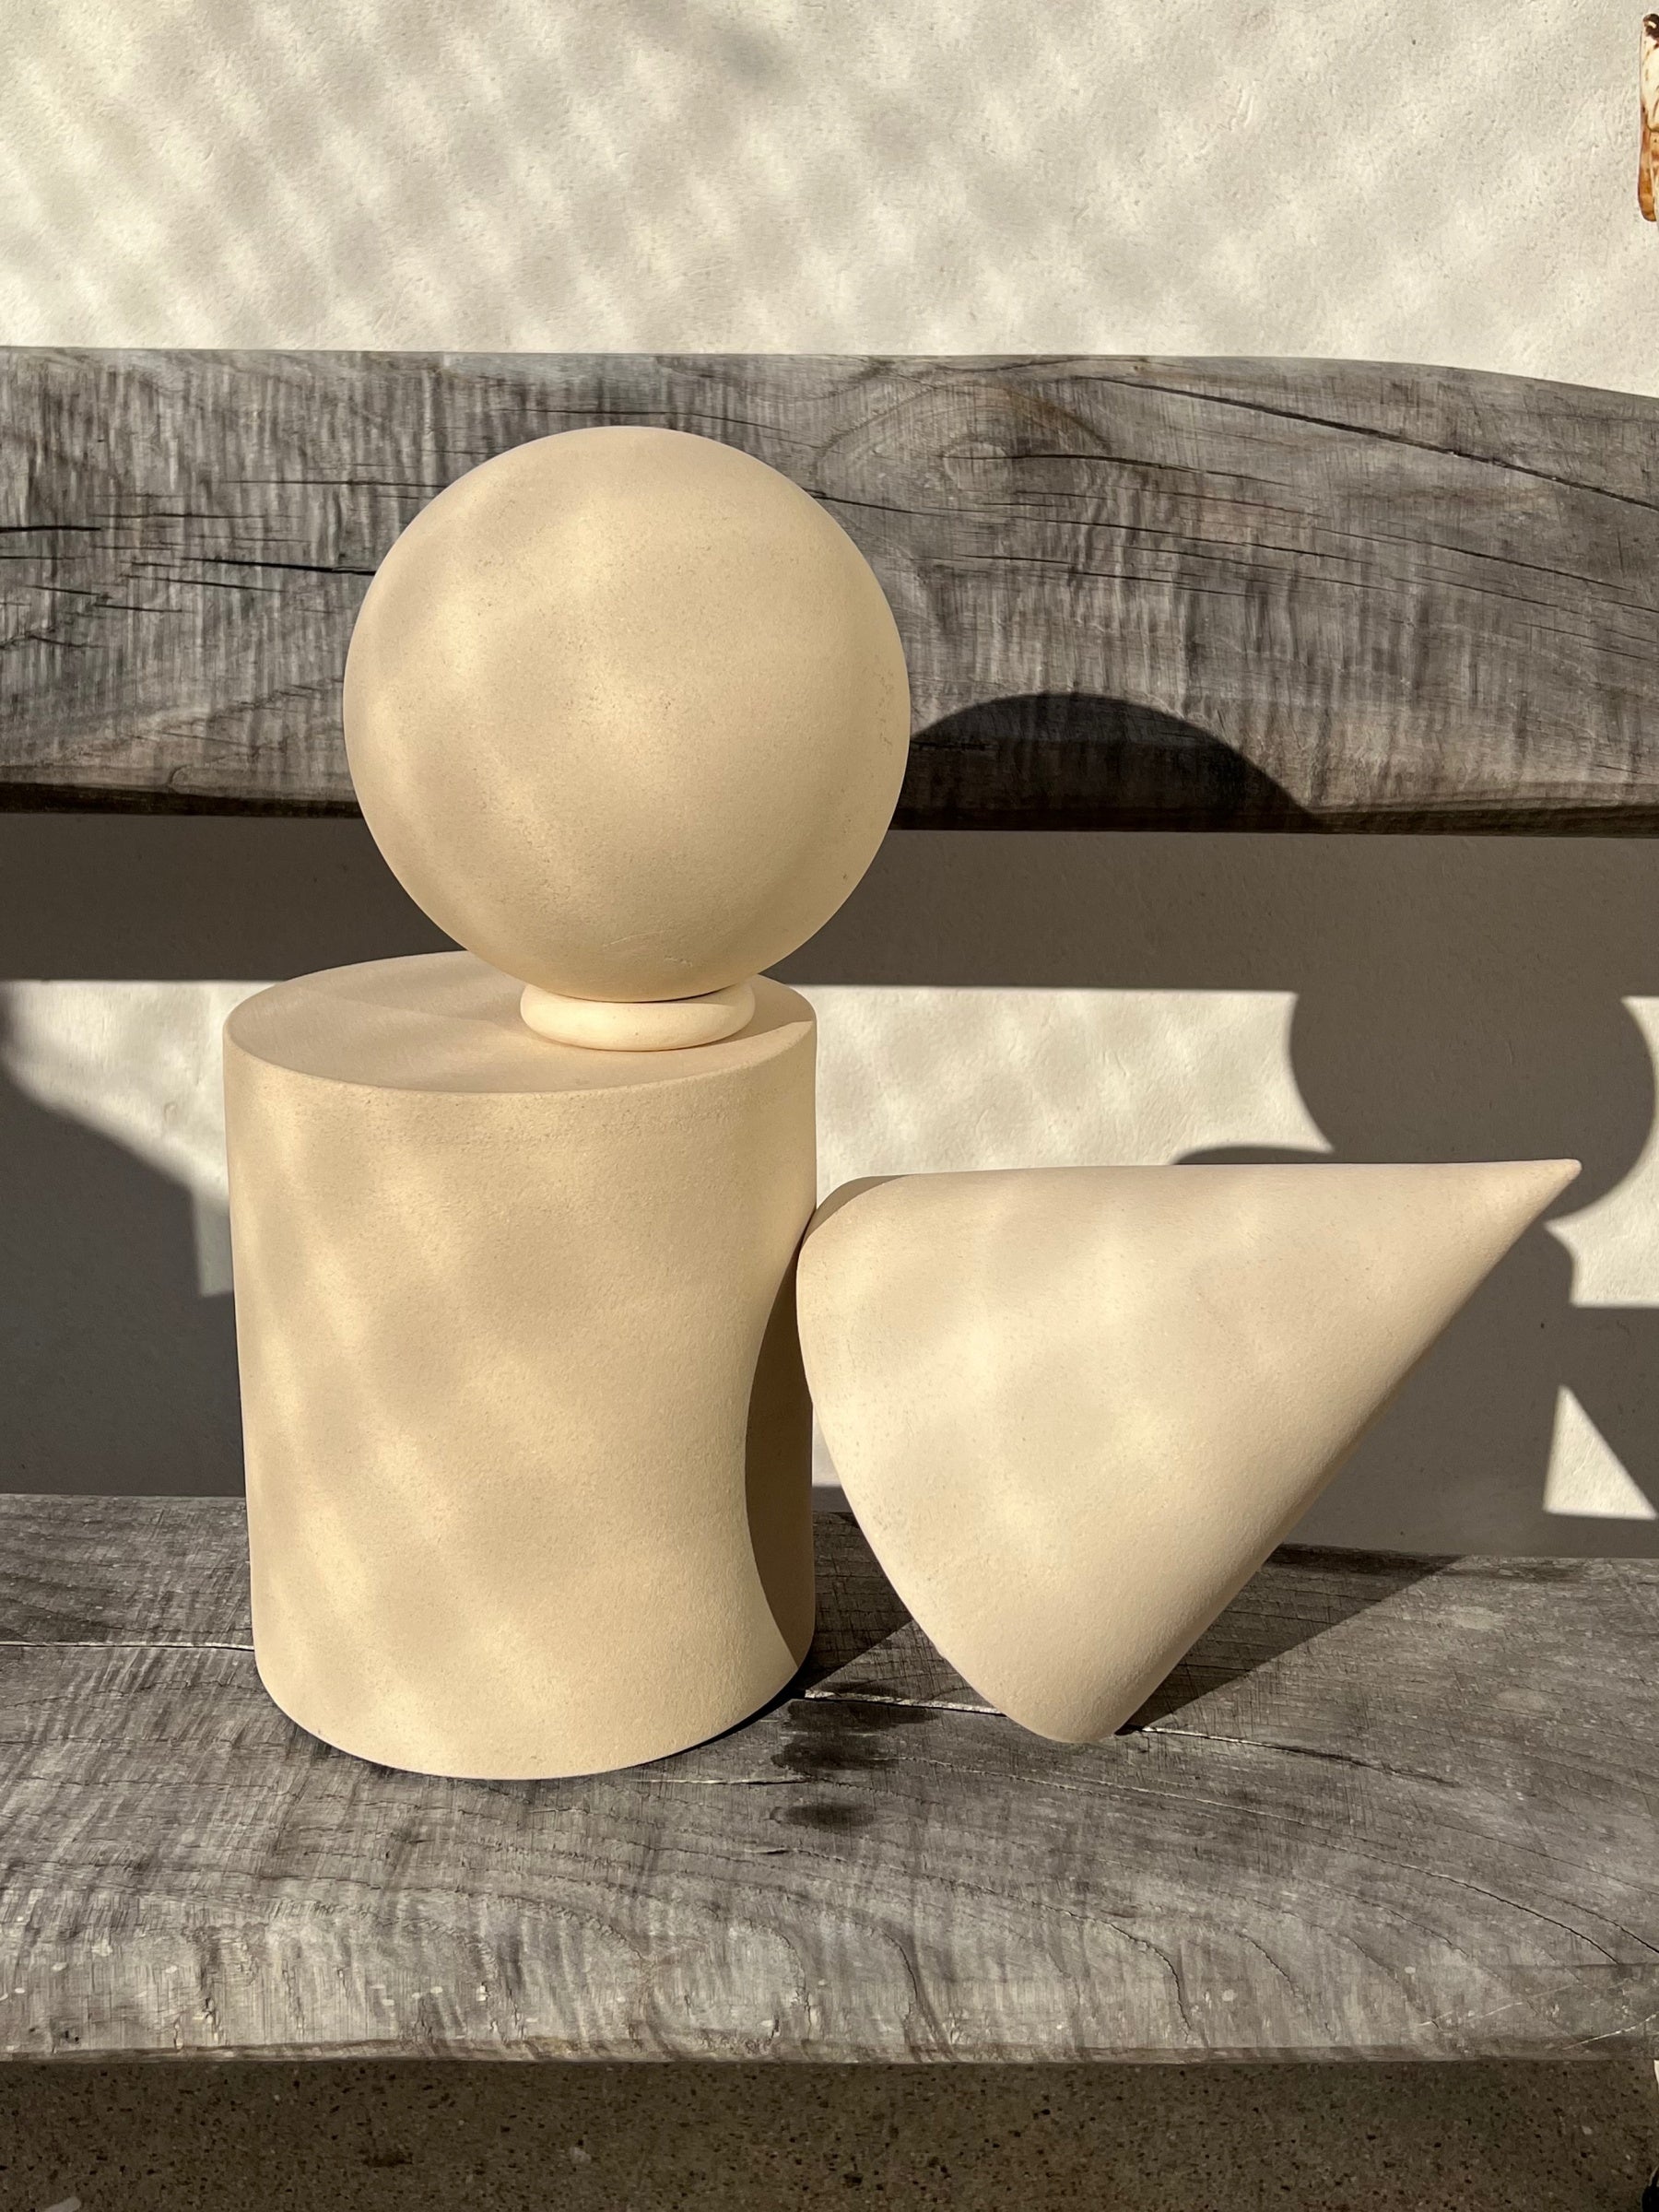 Glazed Geometric Decoration Set Ceramic, White Porcelain, Sculptural Object 'Cubism' For Sale